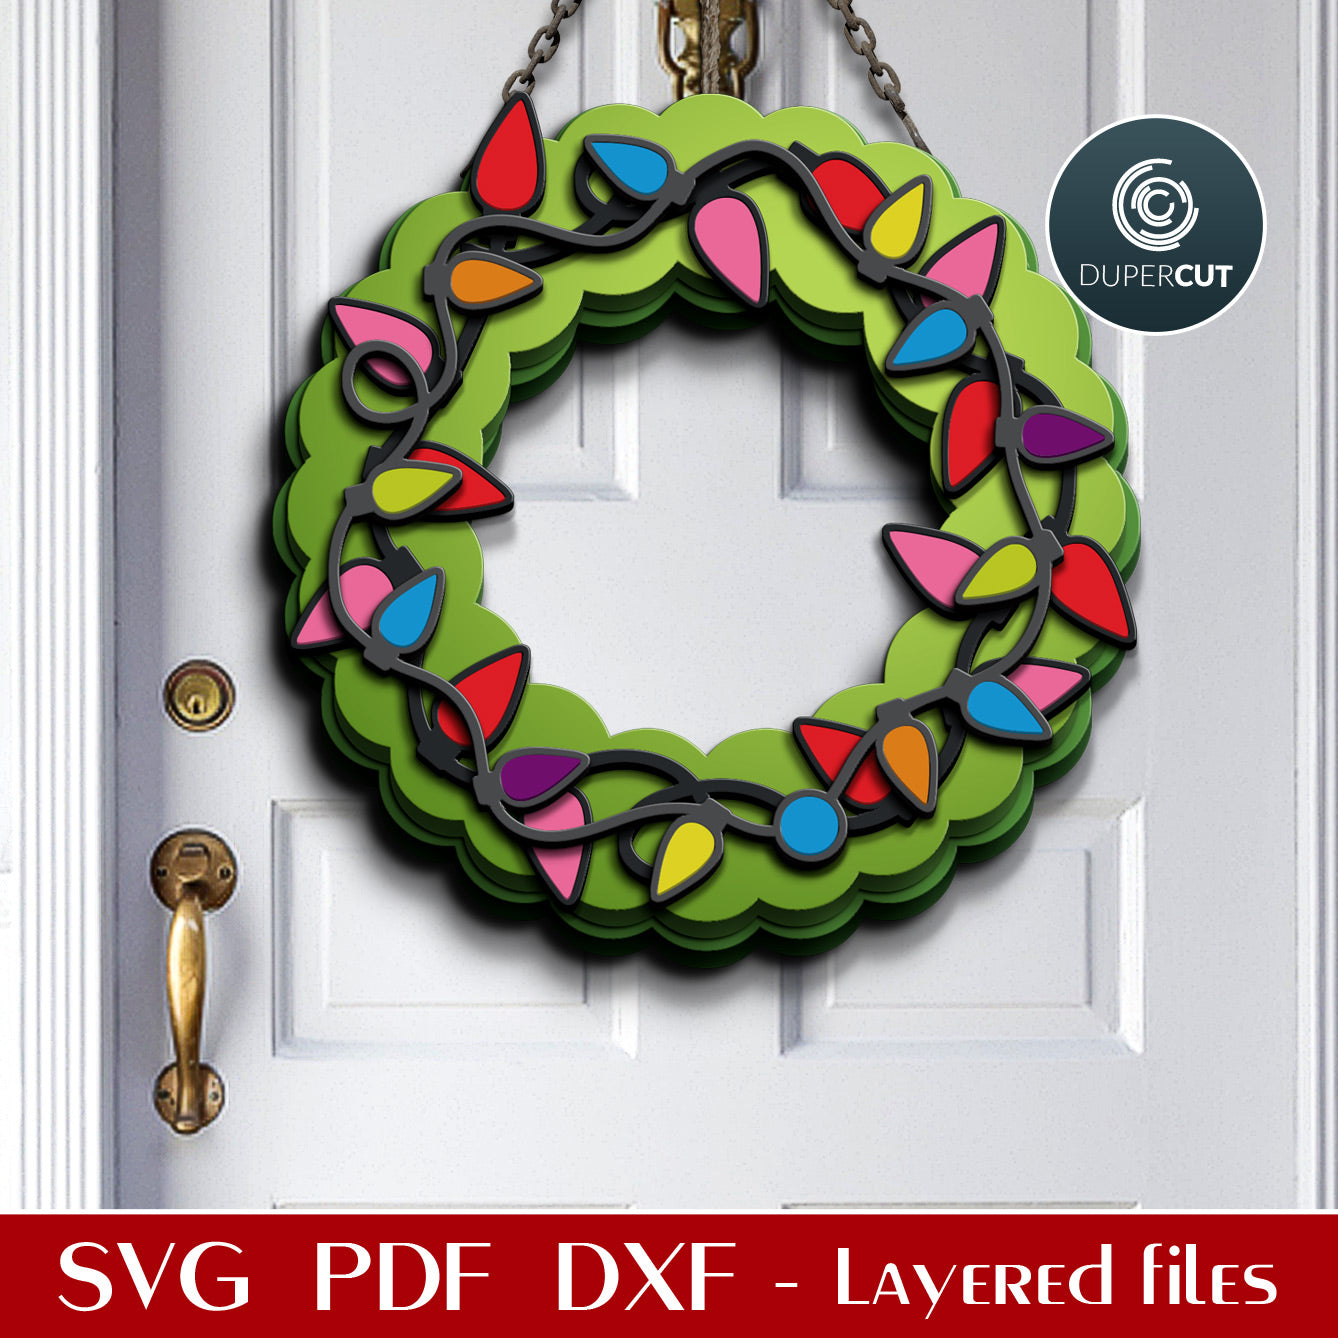 Layered Holiday Lights wreath door hanger - SVG DXF laser cut files for Glowforge, Cricut, CNC Plasma machines by www.DuperCut.com